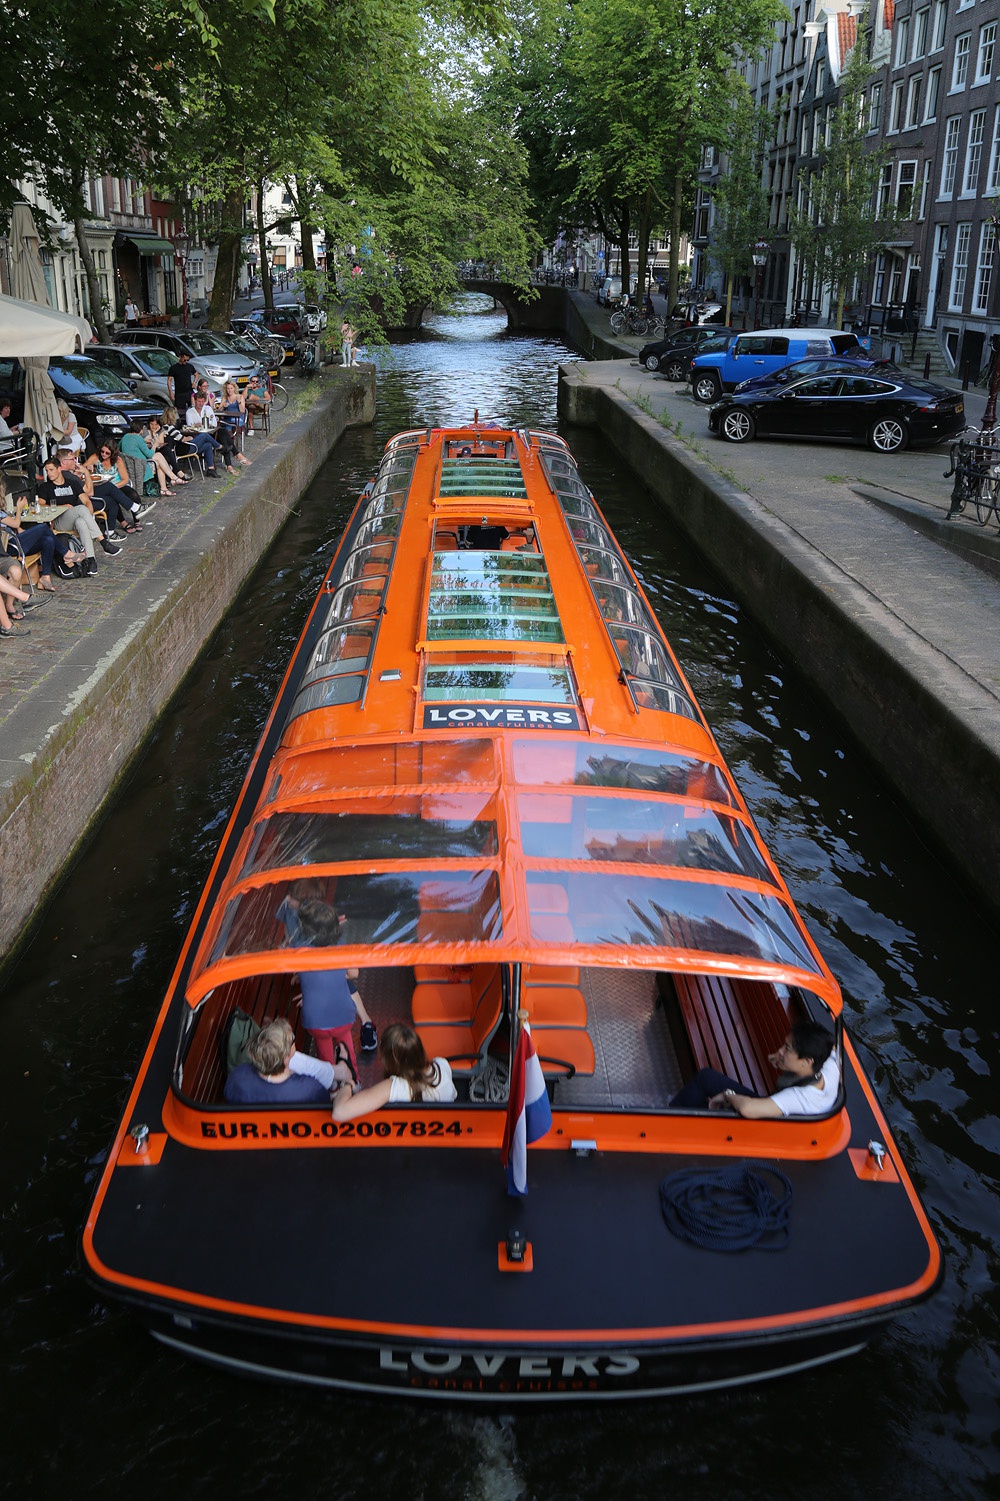 bill-hocker-canal-touring-amsterdam-holland-2016